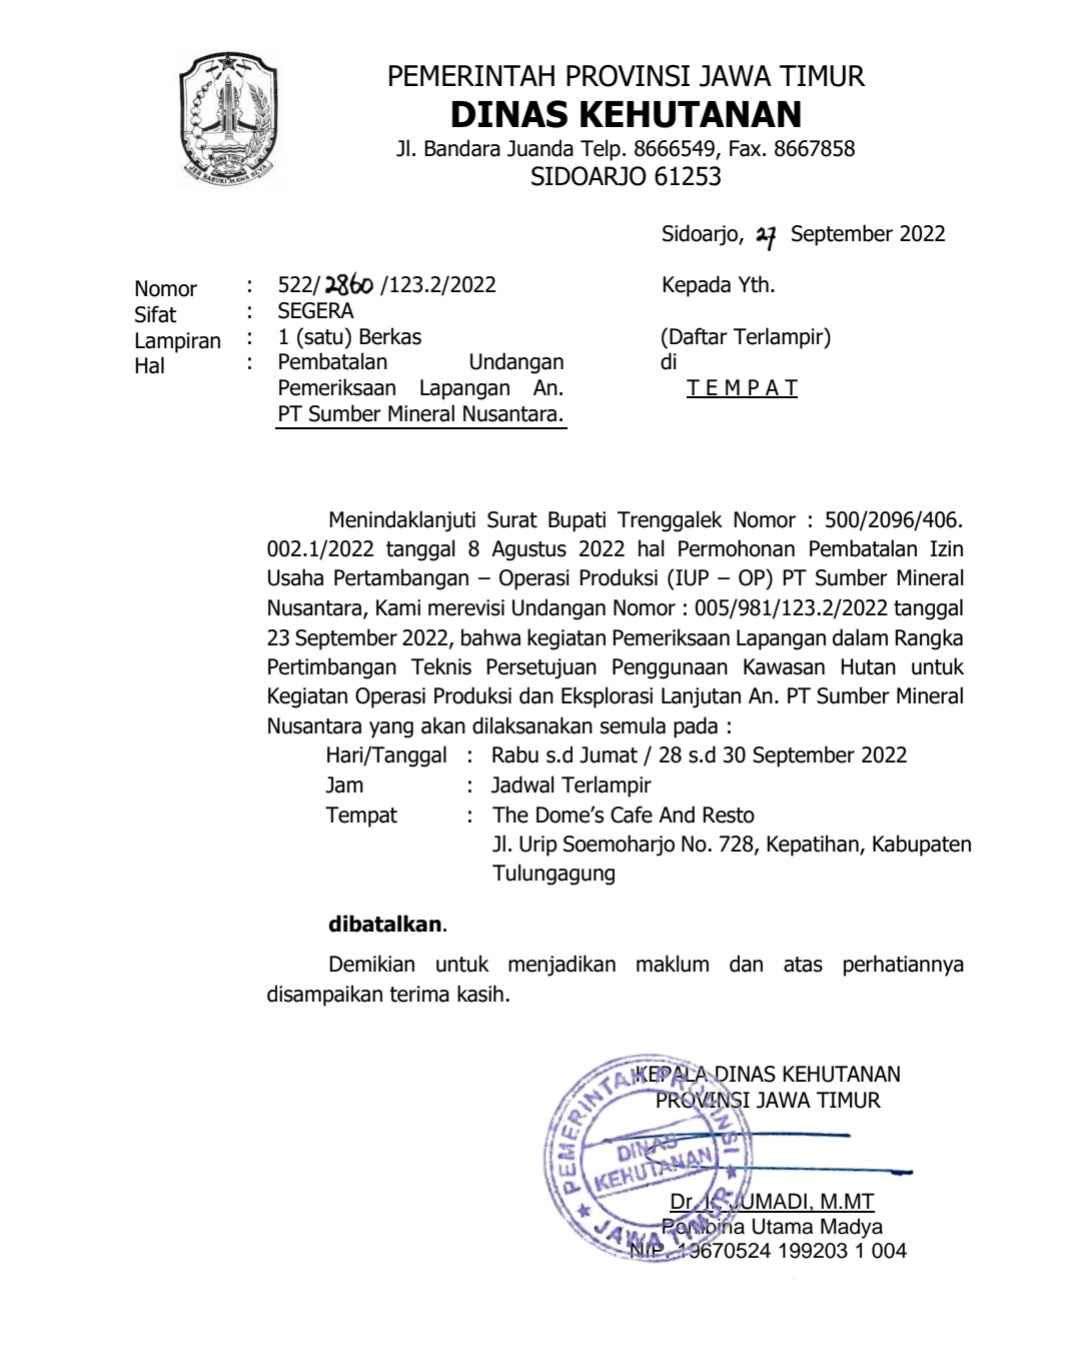 Surat Pembatalan Undangan Pemeriksaan Lapangan PT SMN oleh Dishut Jatim